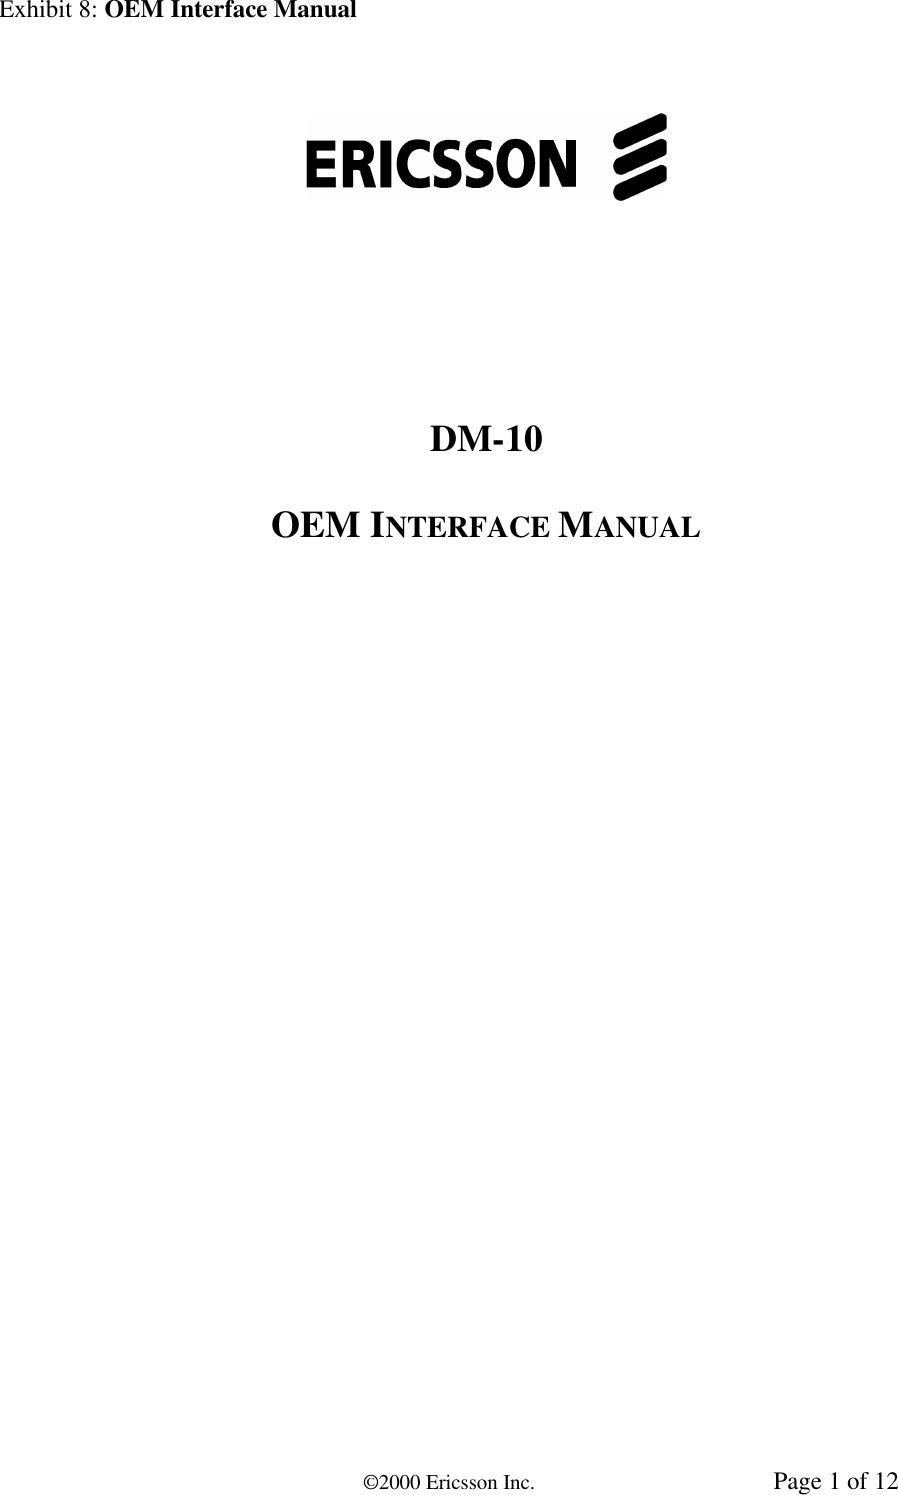 Exhibit 8: OEM Interface Manual©2000 Ericsson Inc. Page 1 of 12DM-10OEM INTERFACE MANUAL